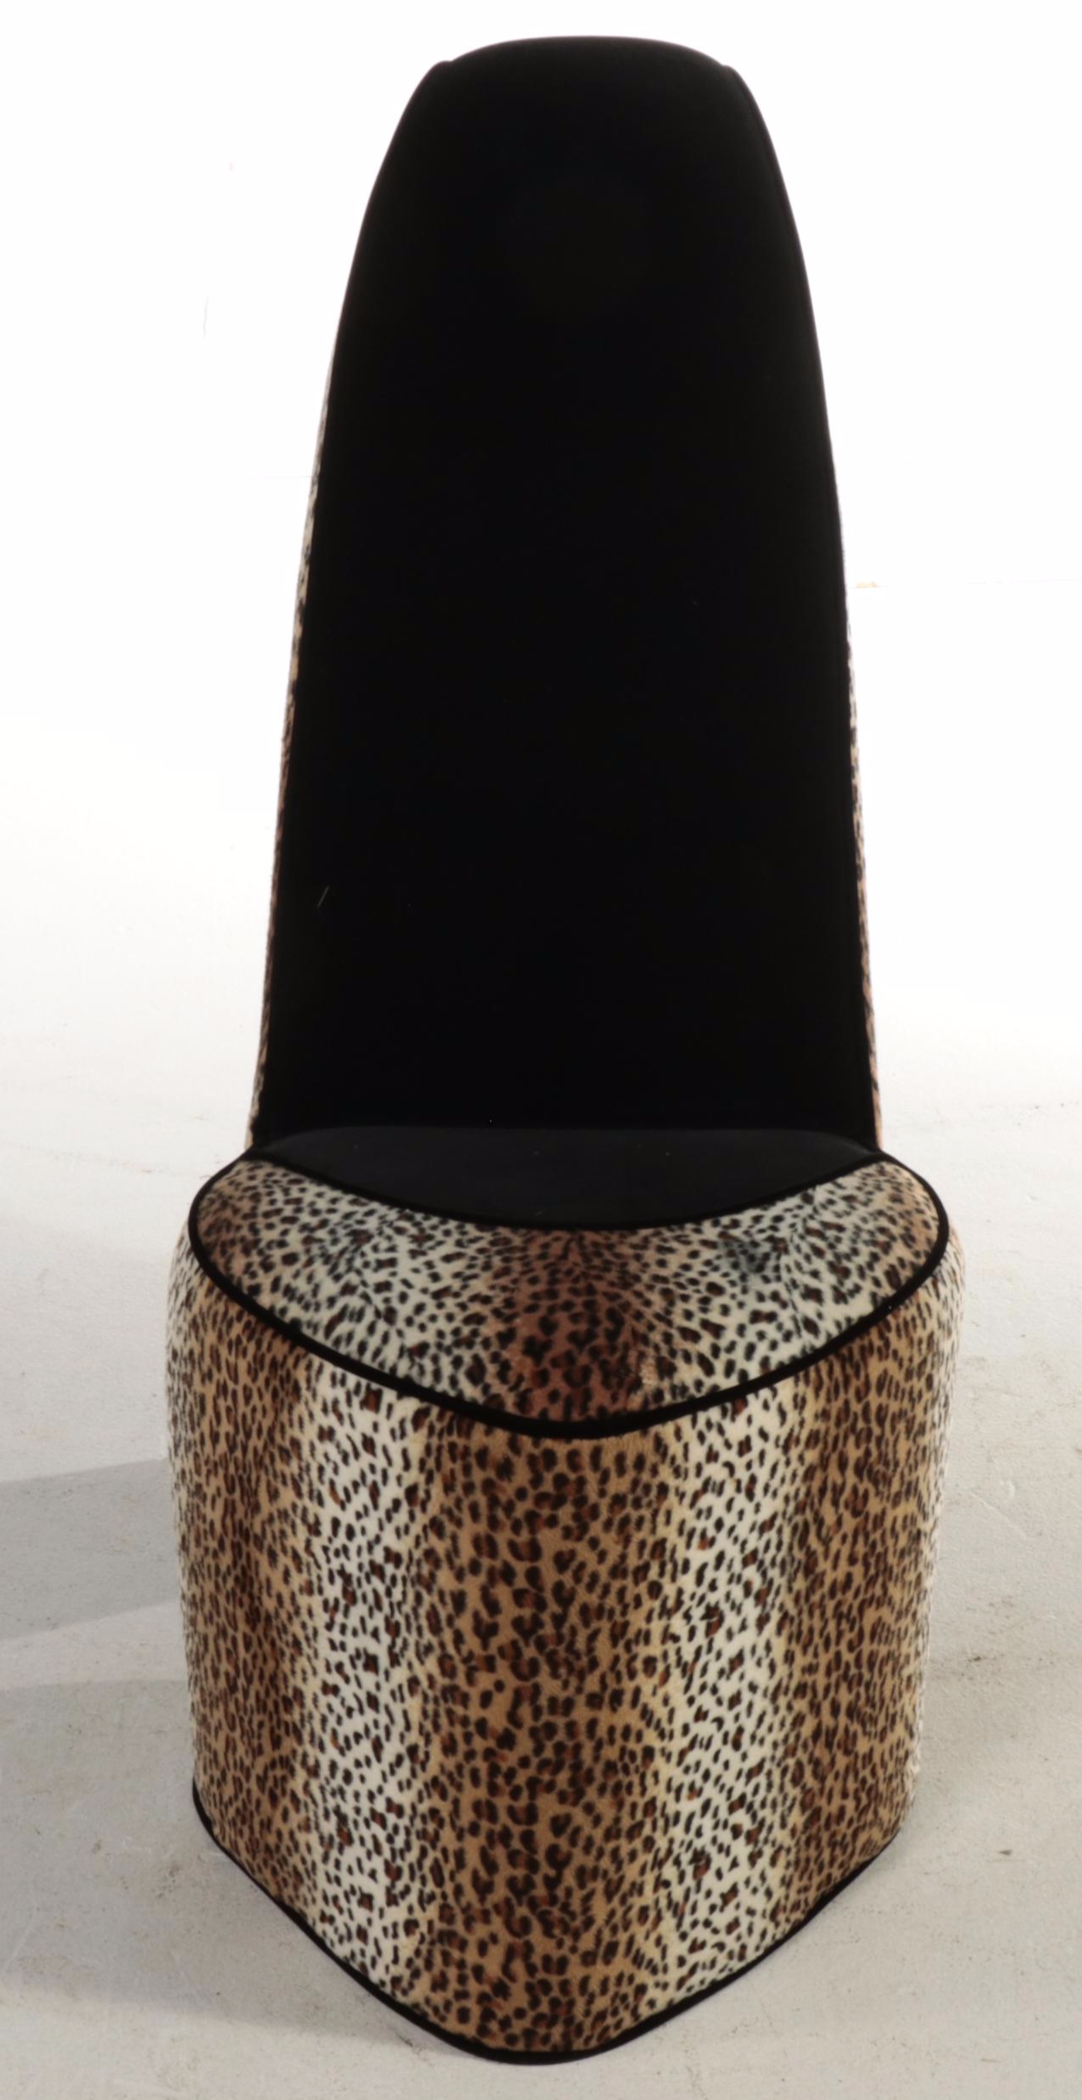 Leopard Print High Heel Shoe Chair | EBTH